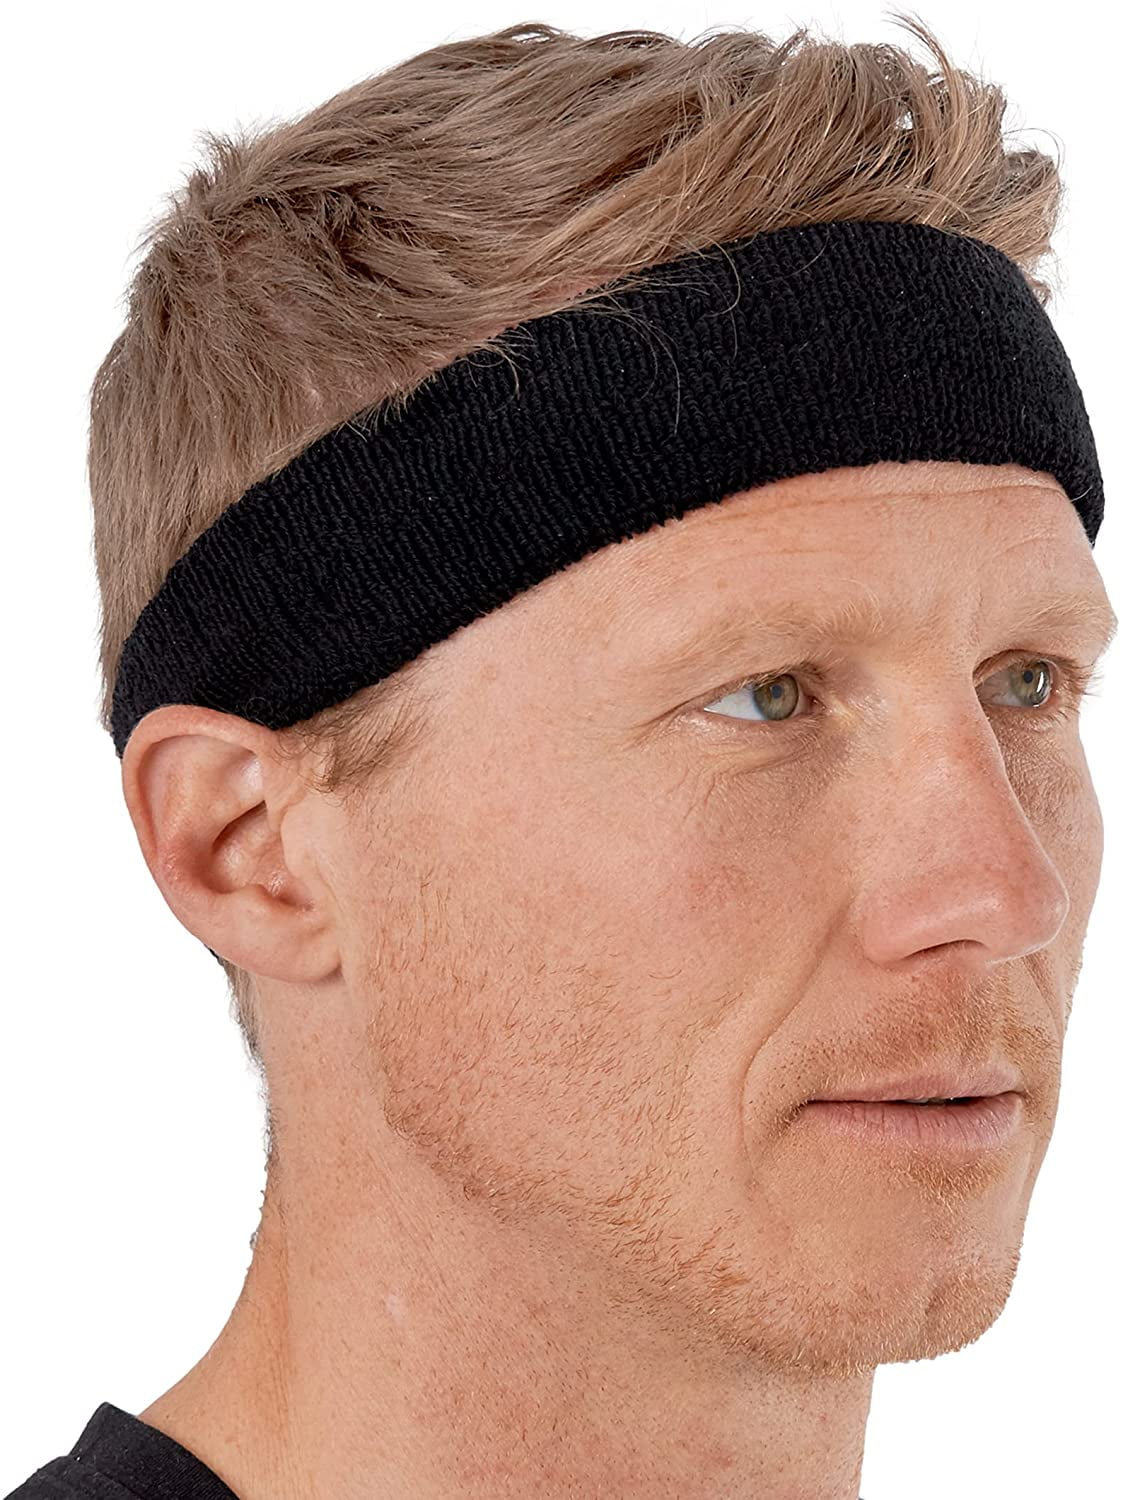 Soft Sports Headband Non Slip Sweatband Head Ties for Basketball Running Workout 